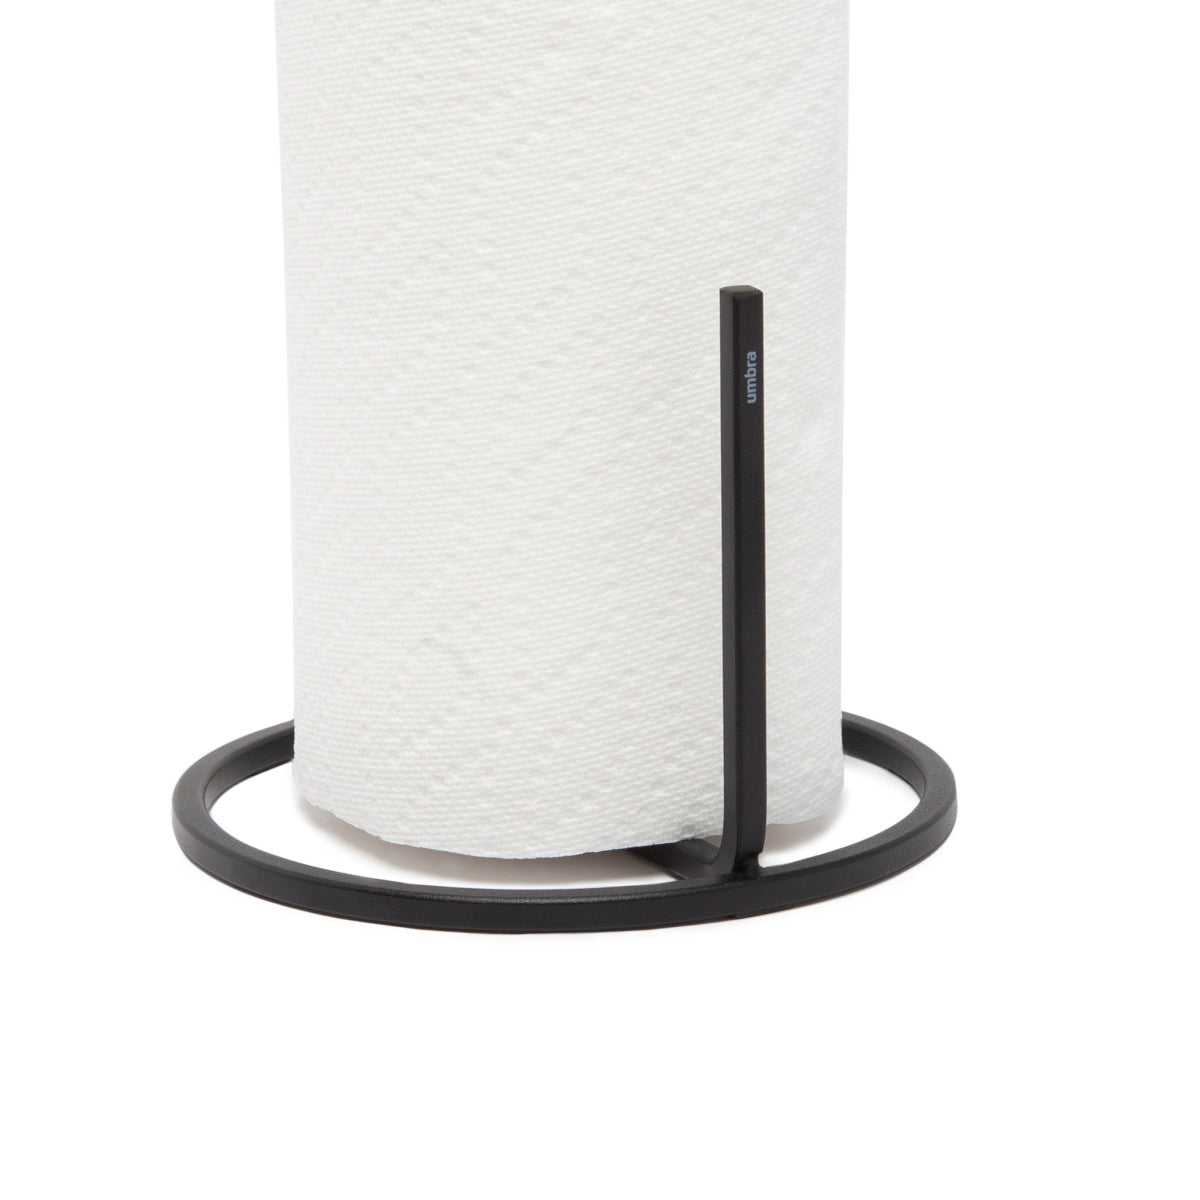 Umbra Squire Countertop Paper Towel Holder